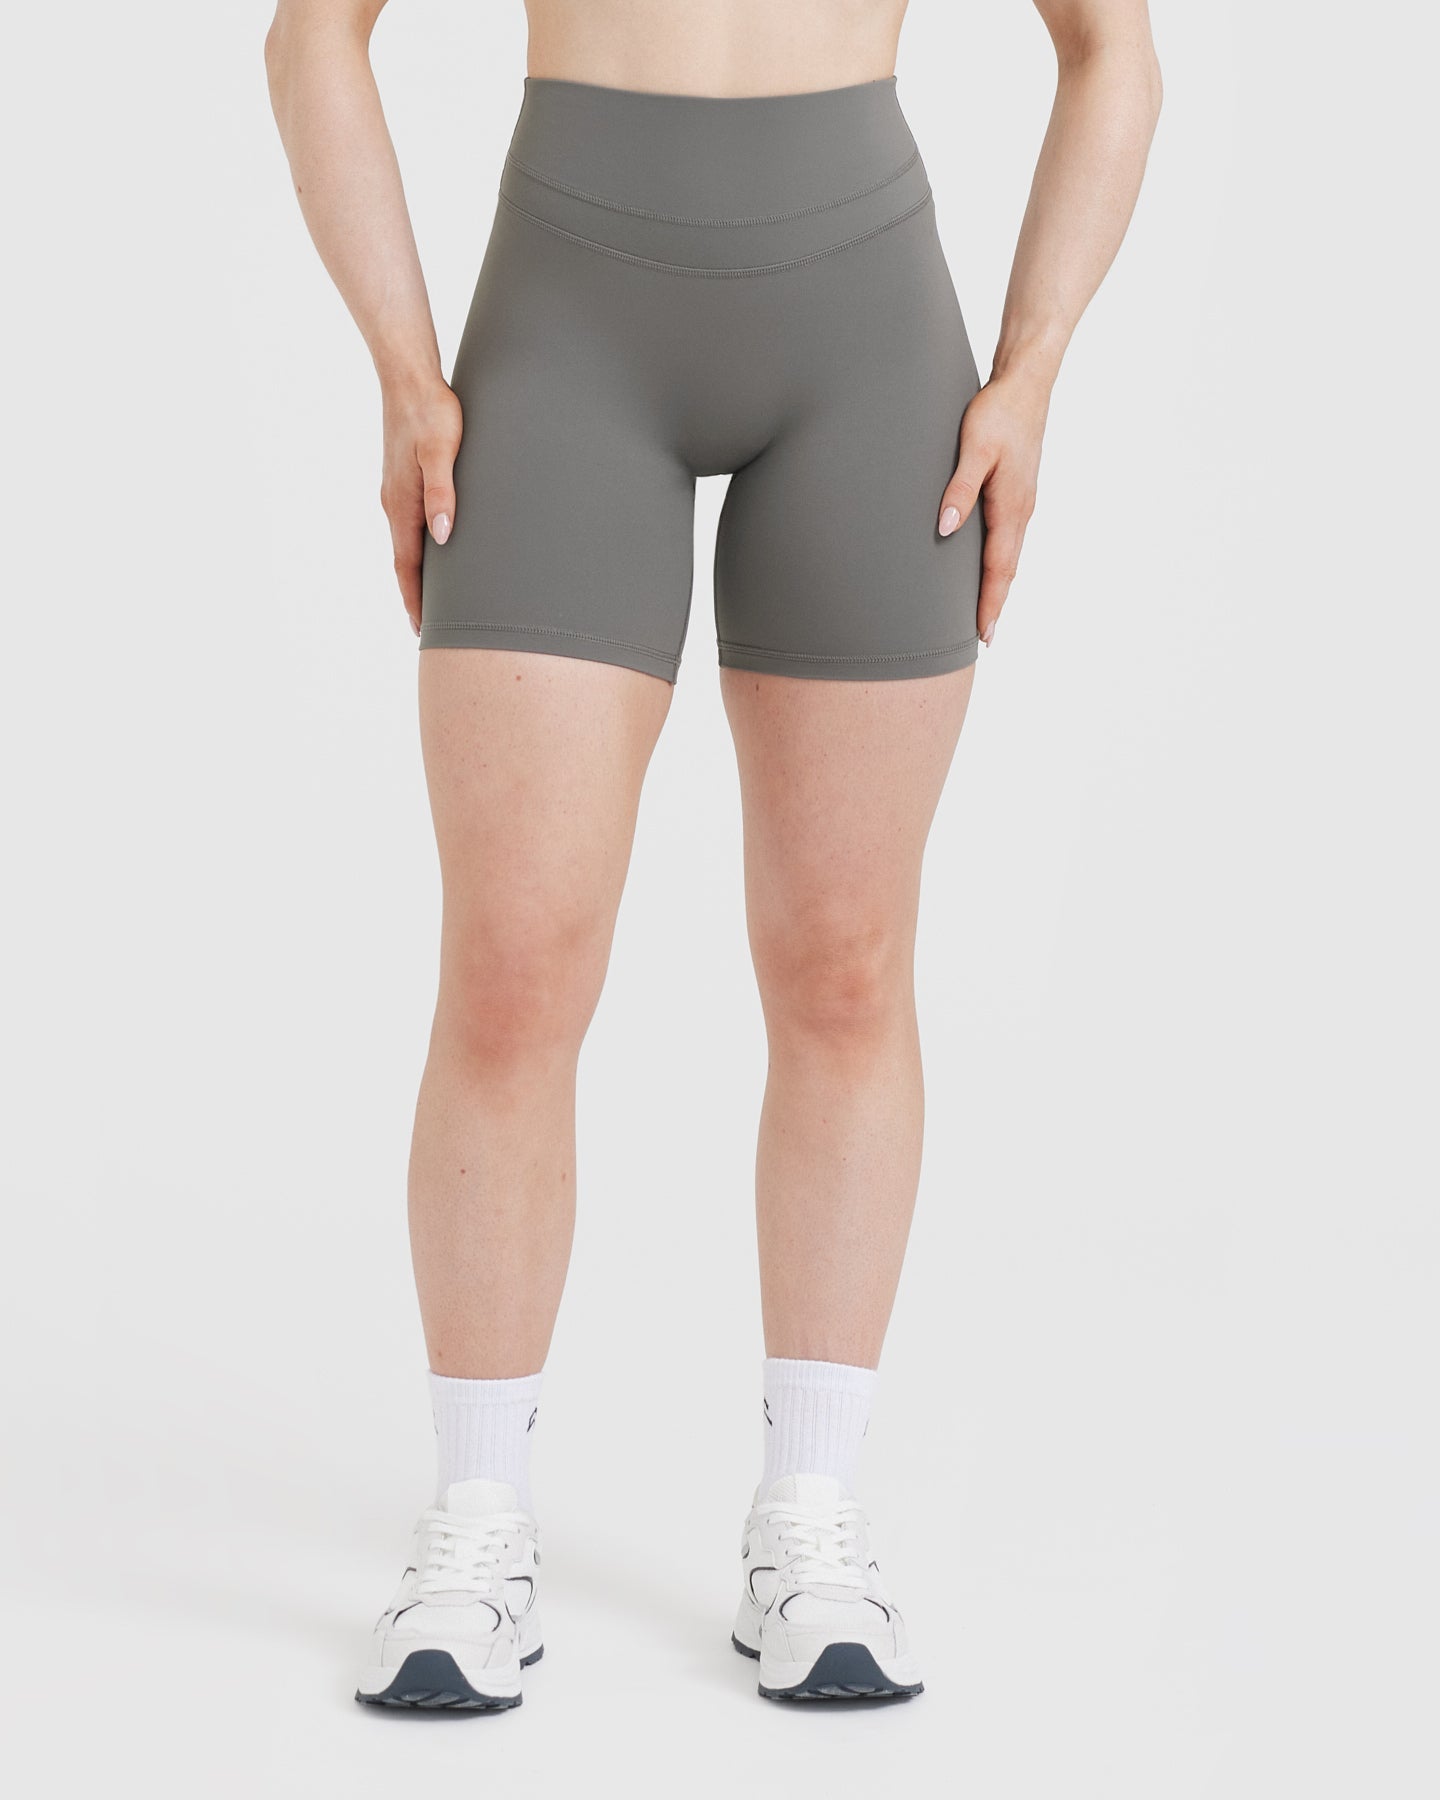 NIVIA Women Compression Shorts - Grey - S